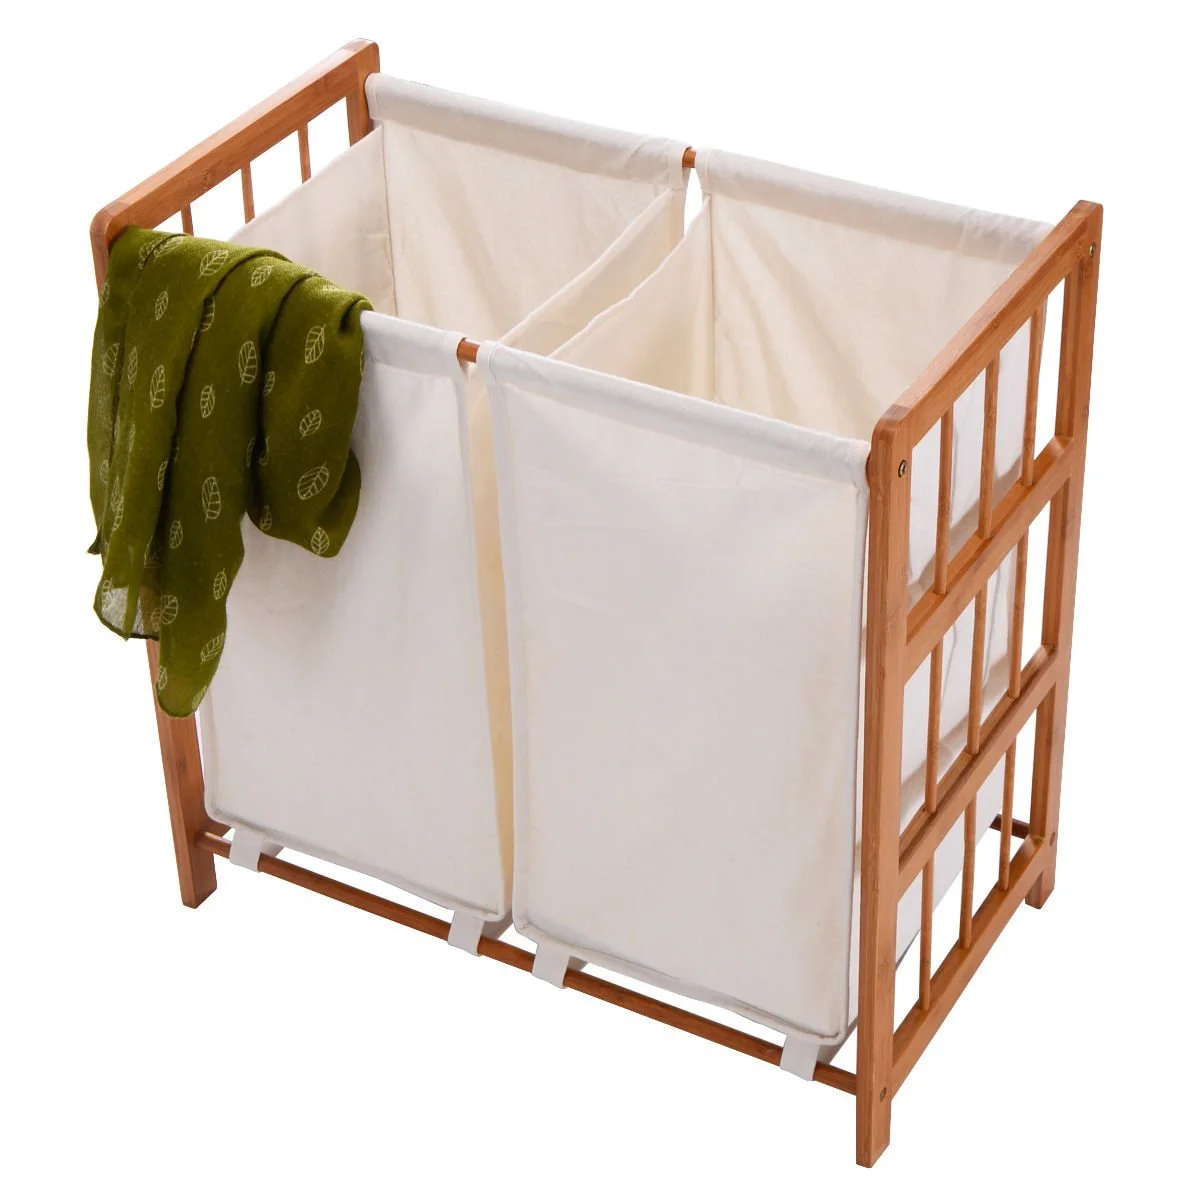 3 Bags Laundry Basket Bamboo Fabric Storage Bins